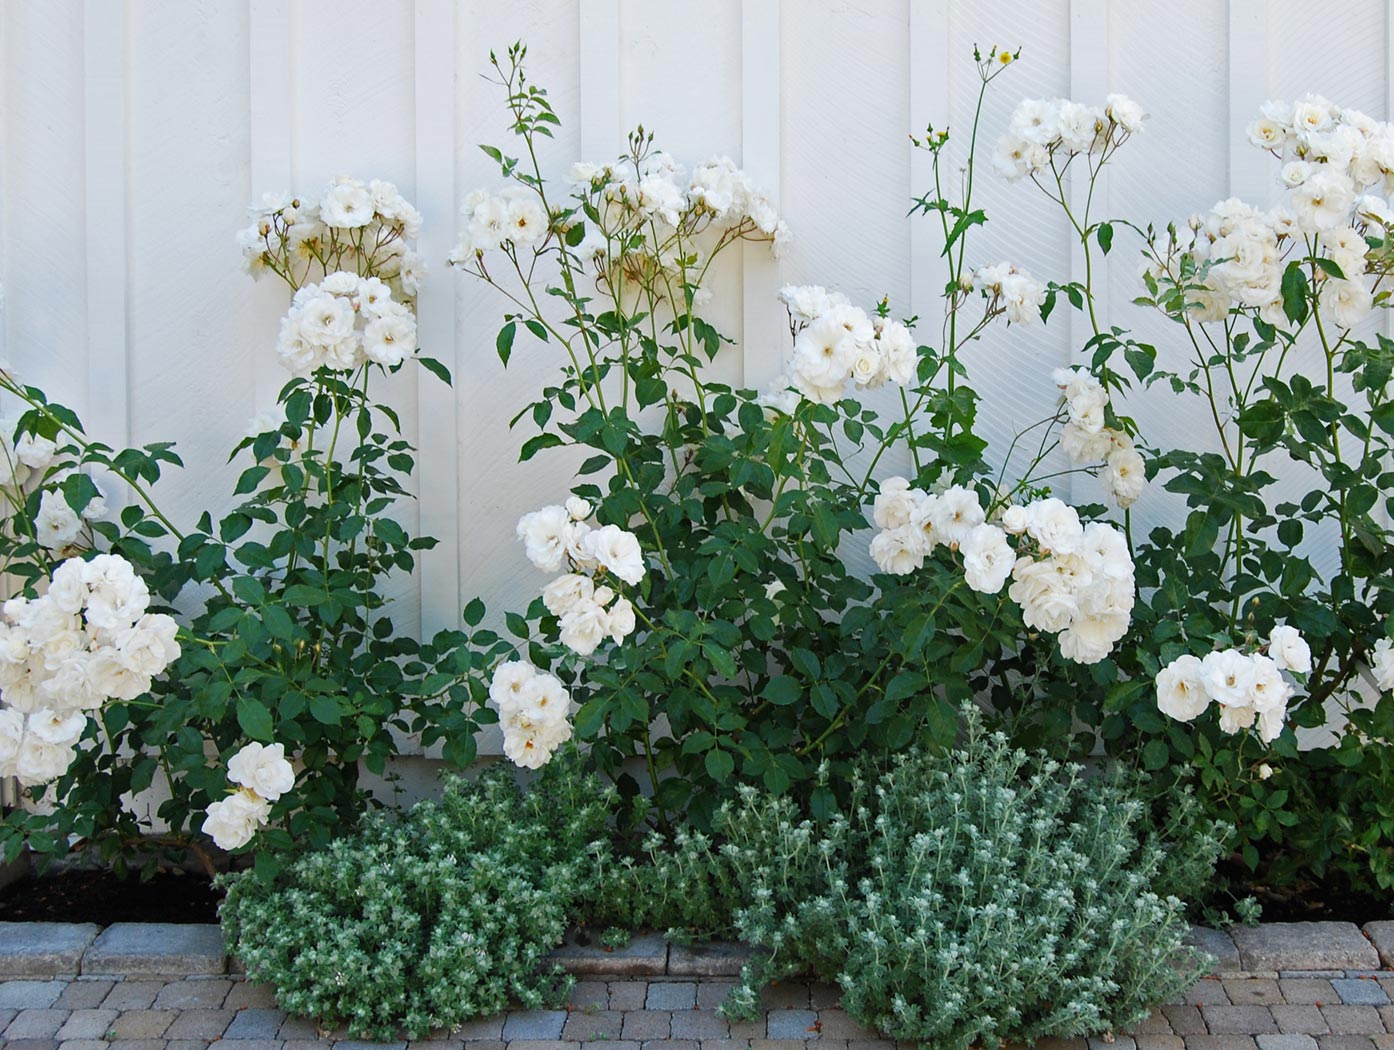 White rose bush with white house siding and medium ground cover bushes